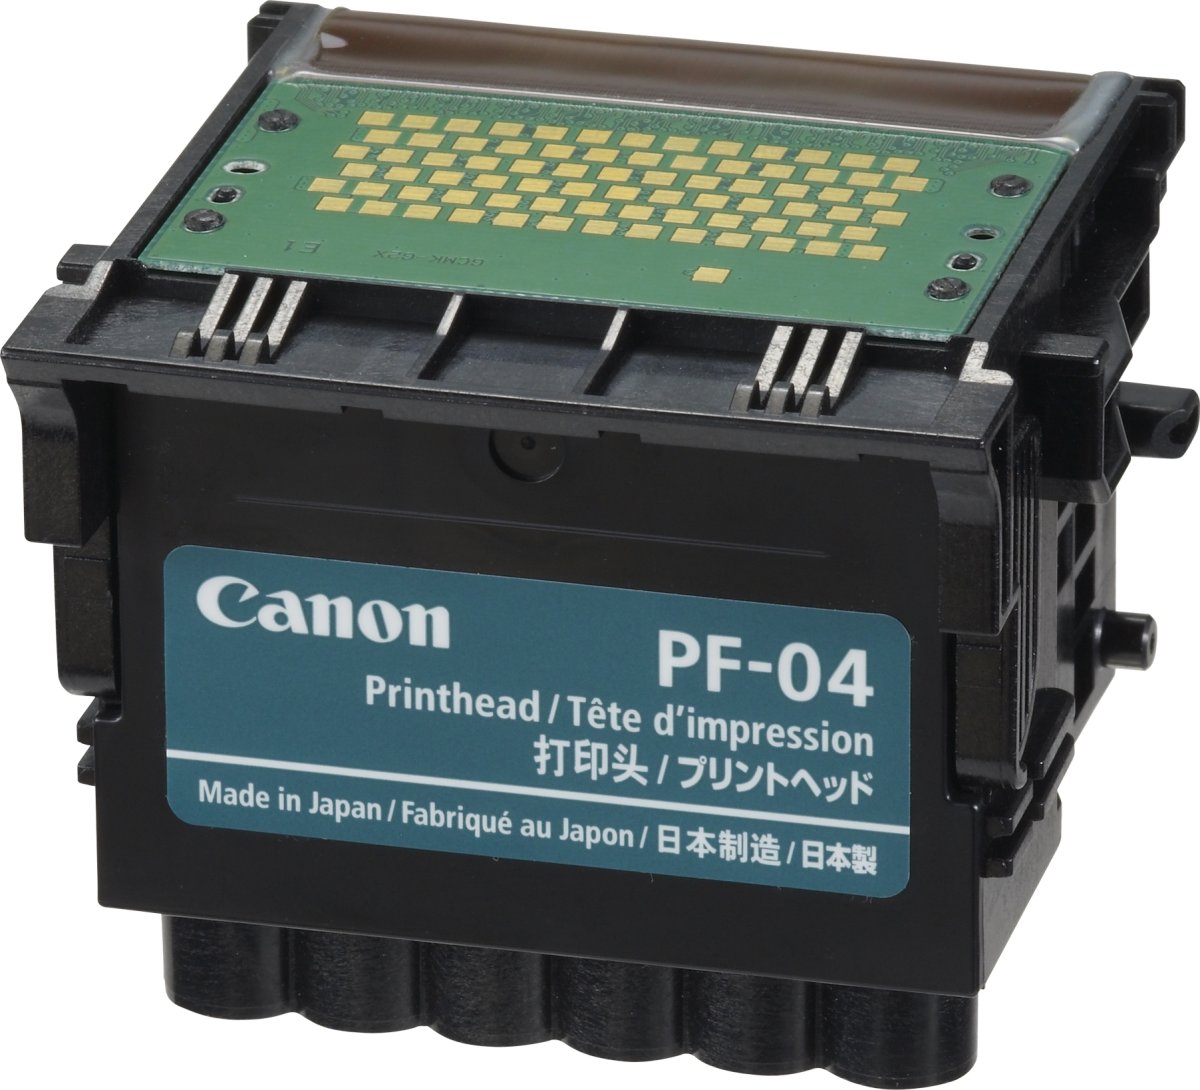 Canon PF-04/3630B001 printhead